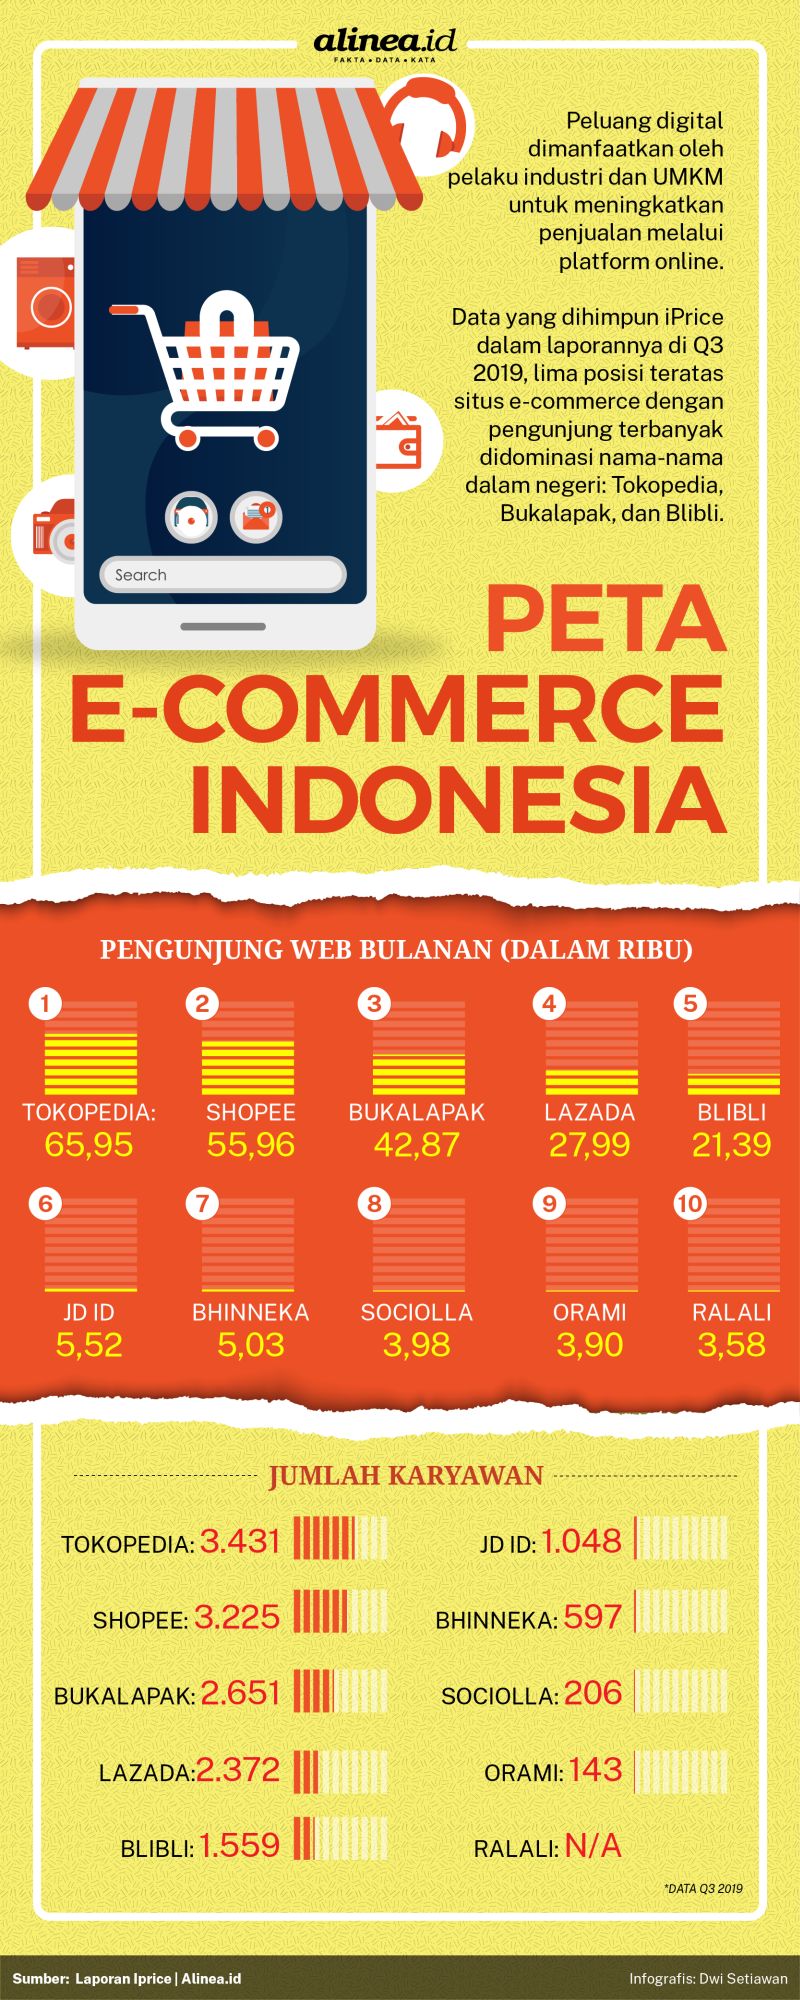 Raja e-commerce di Indonesia. Alinea.id